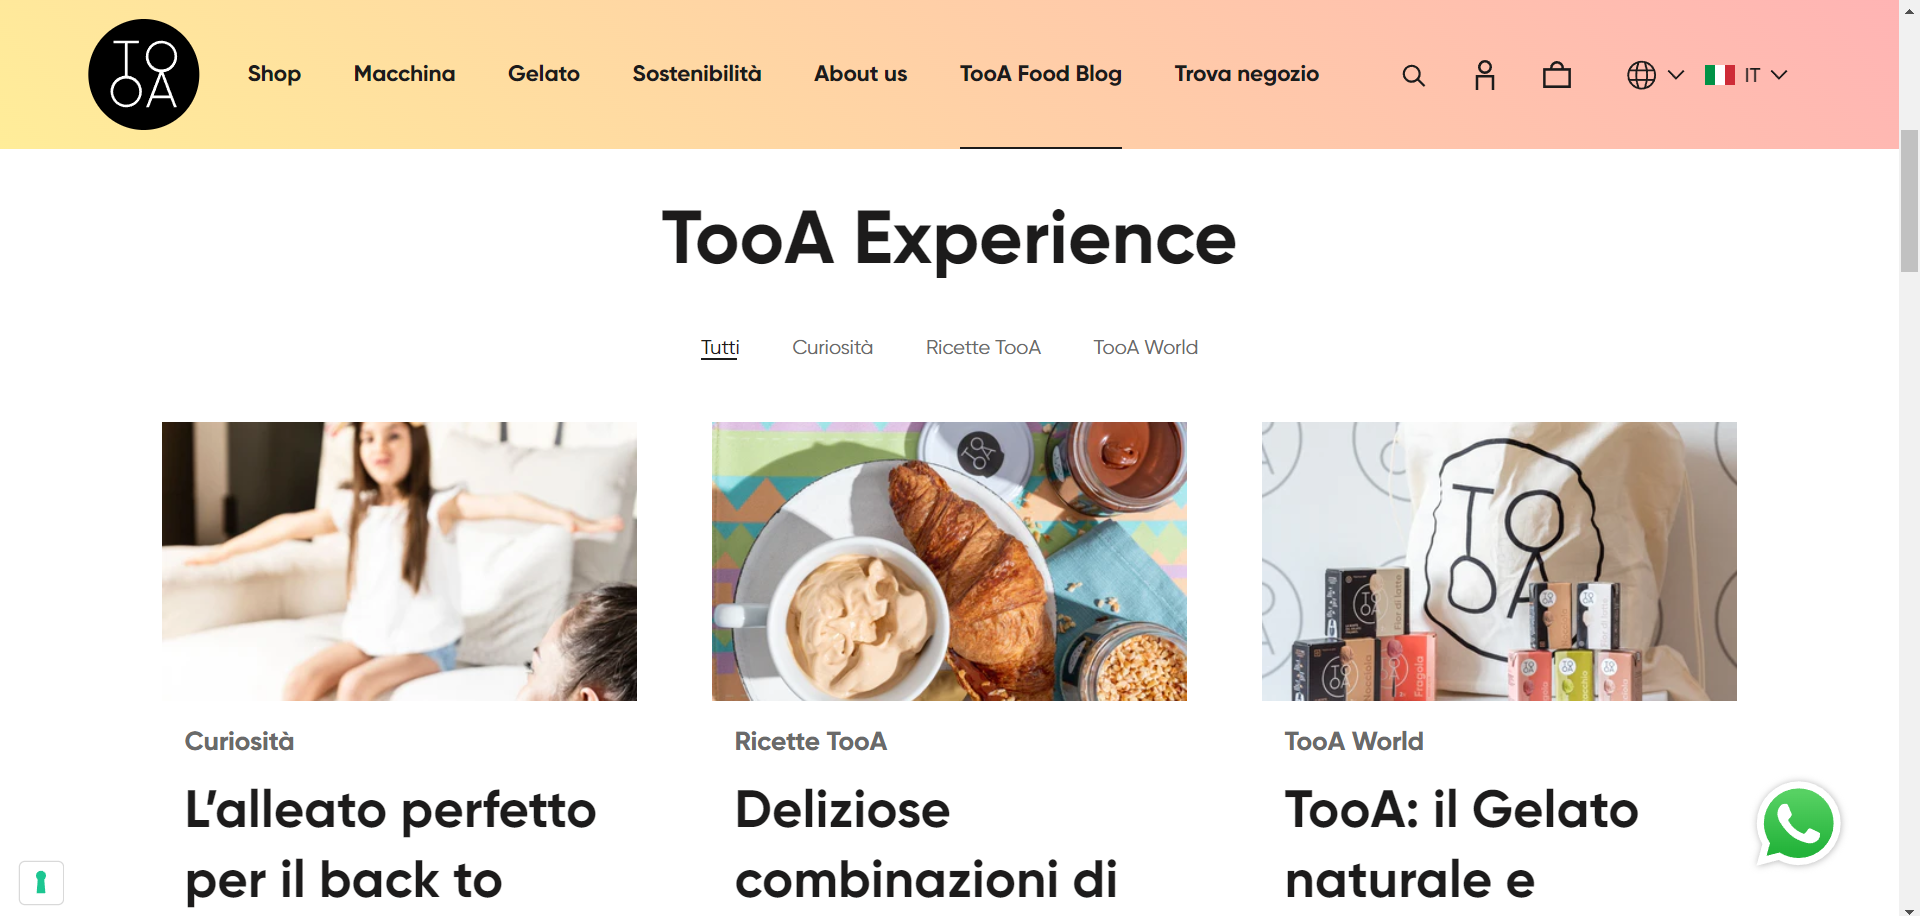 tooa experience, foodblog